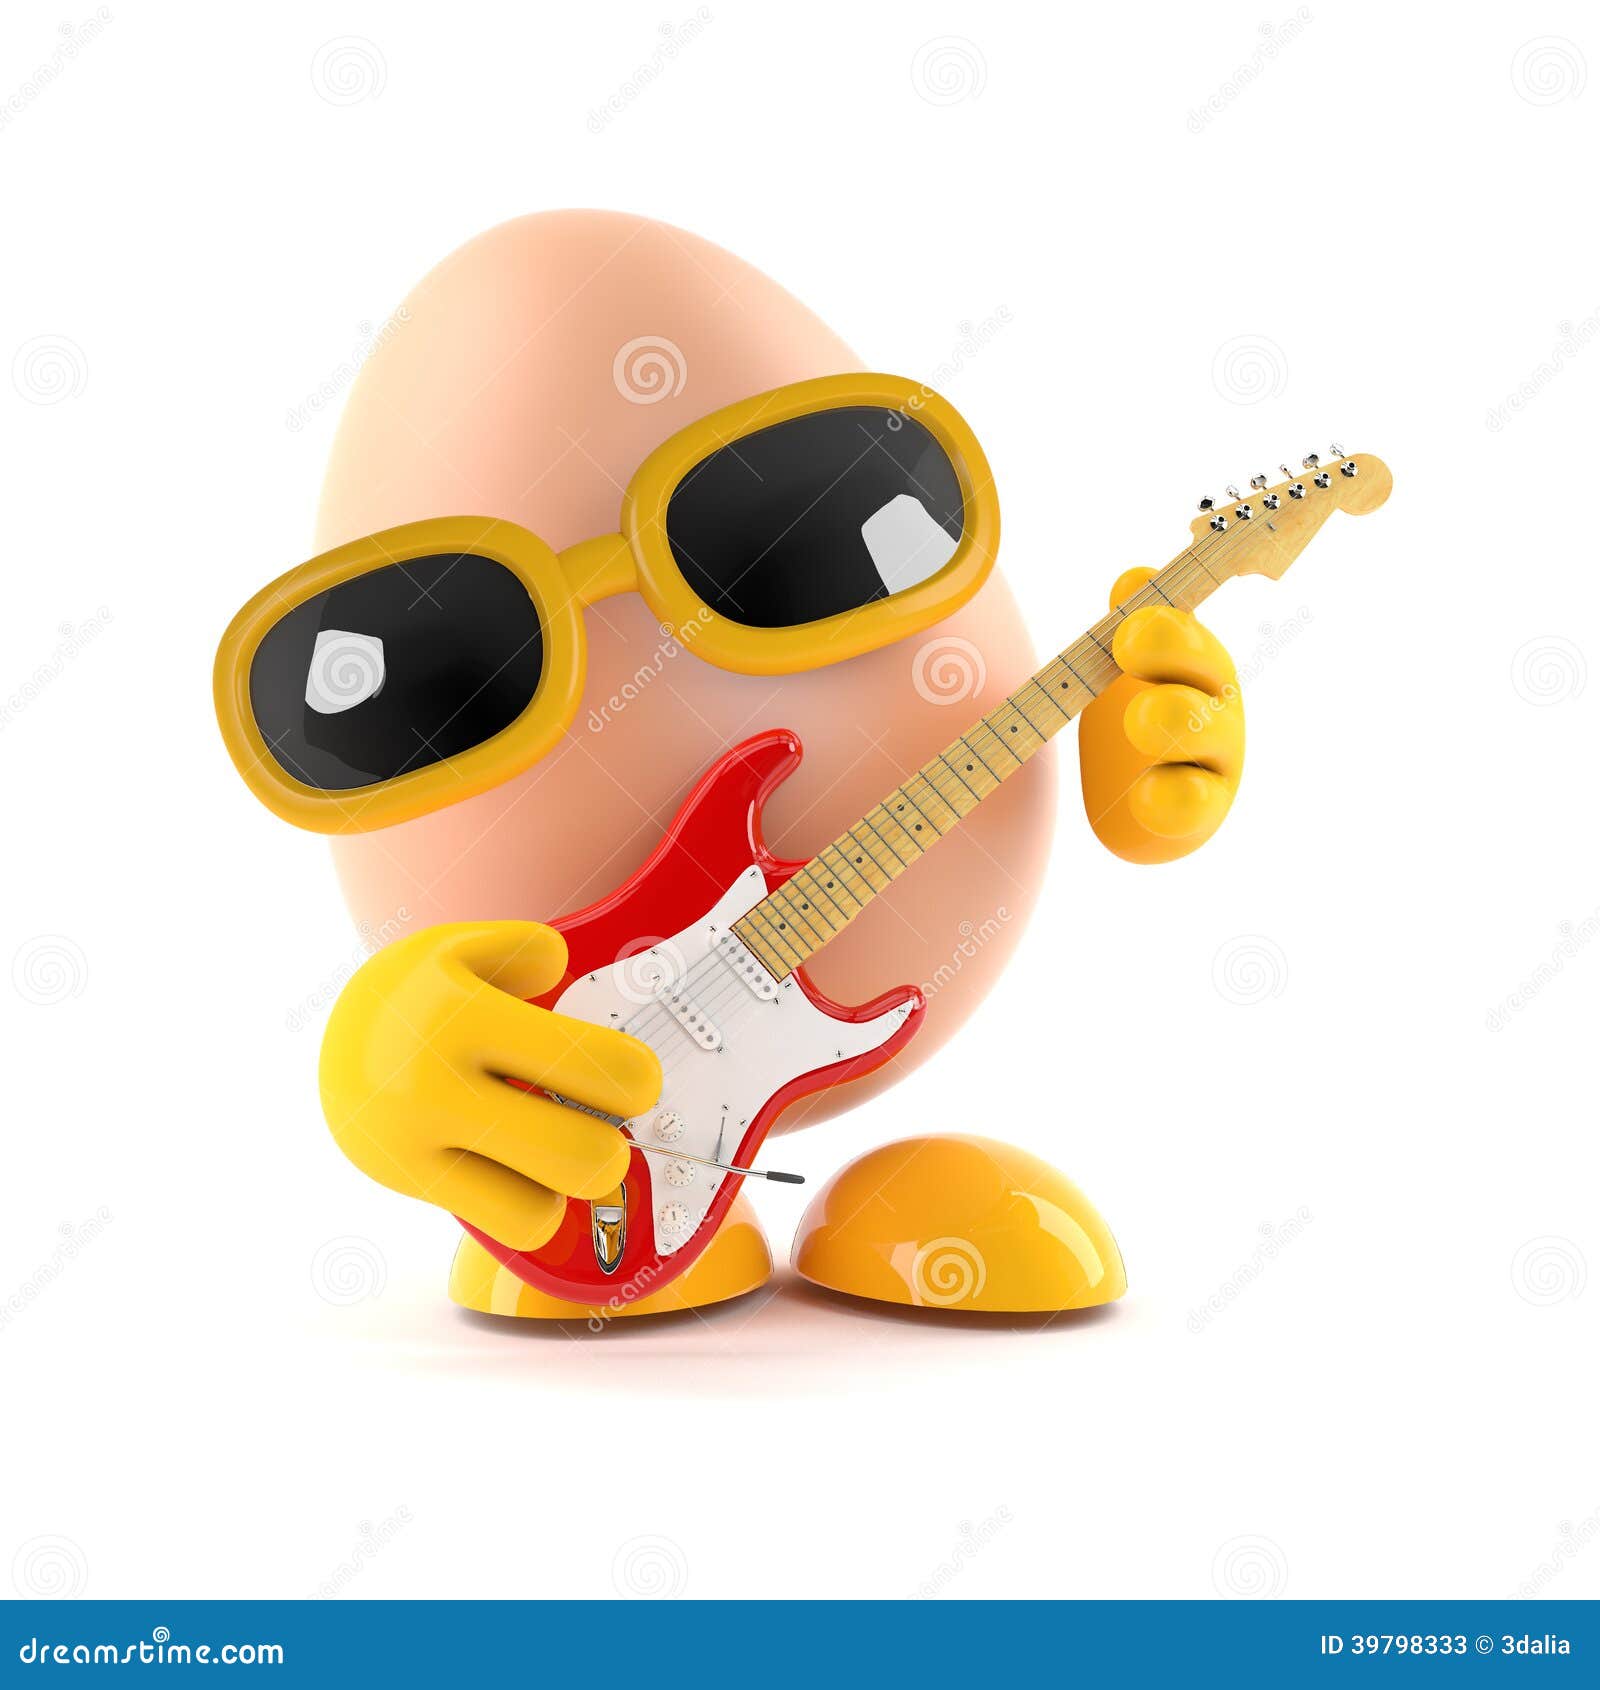 d-rock-egg-render-playing-guitar-39798333.jpg